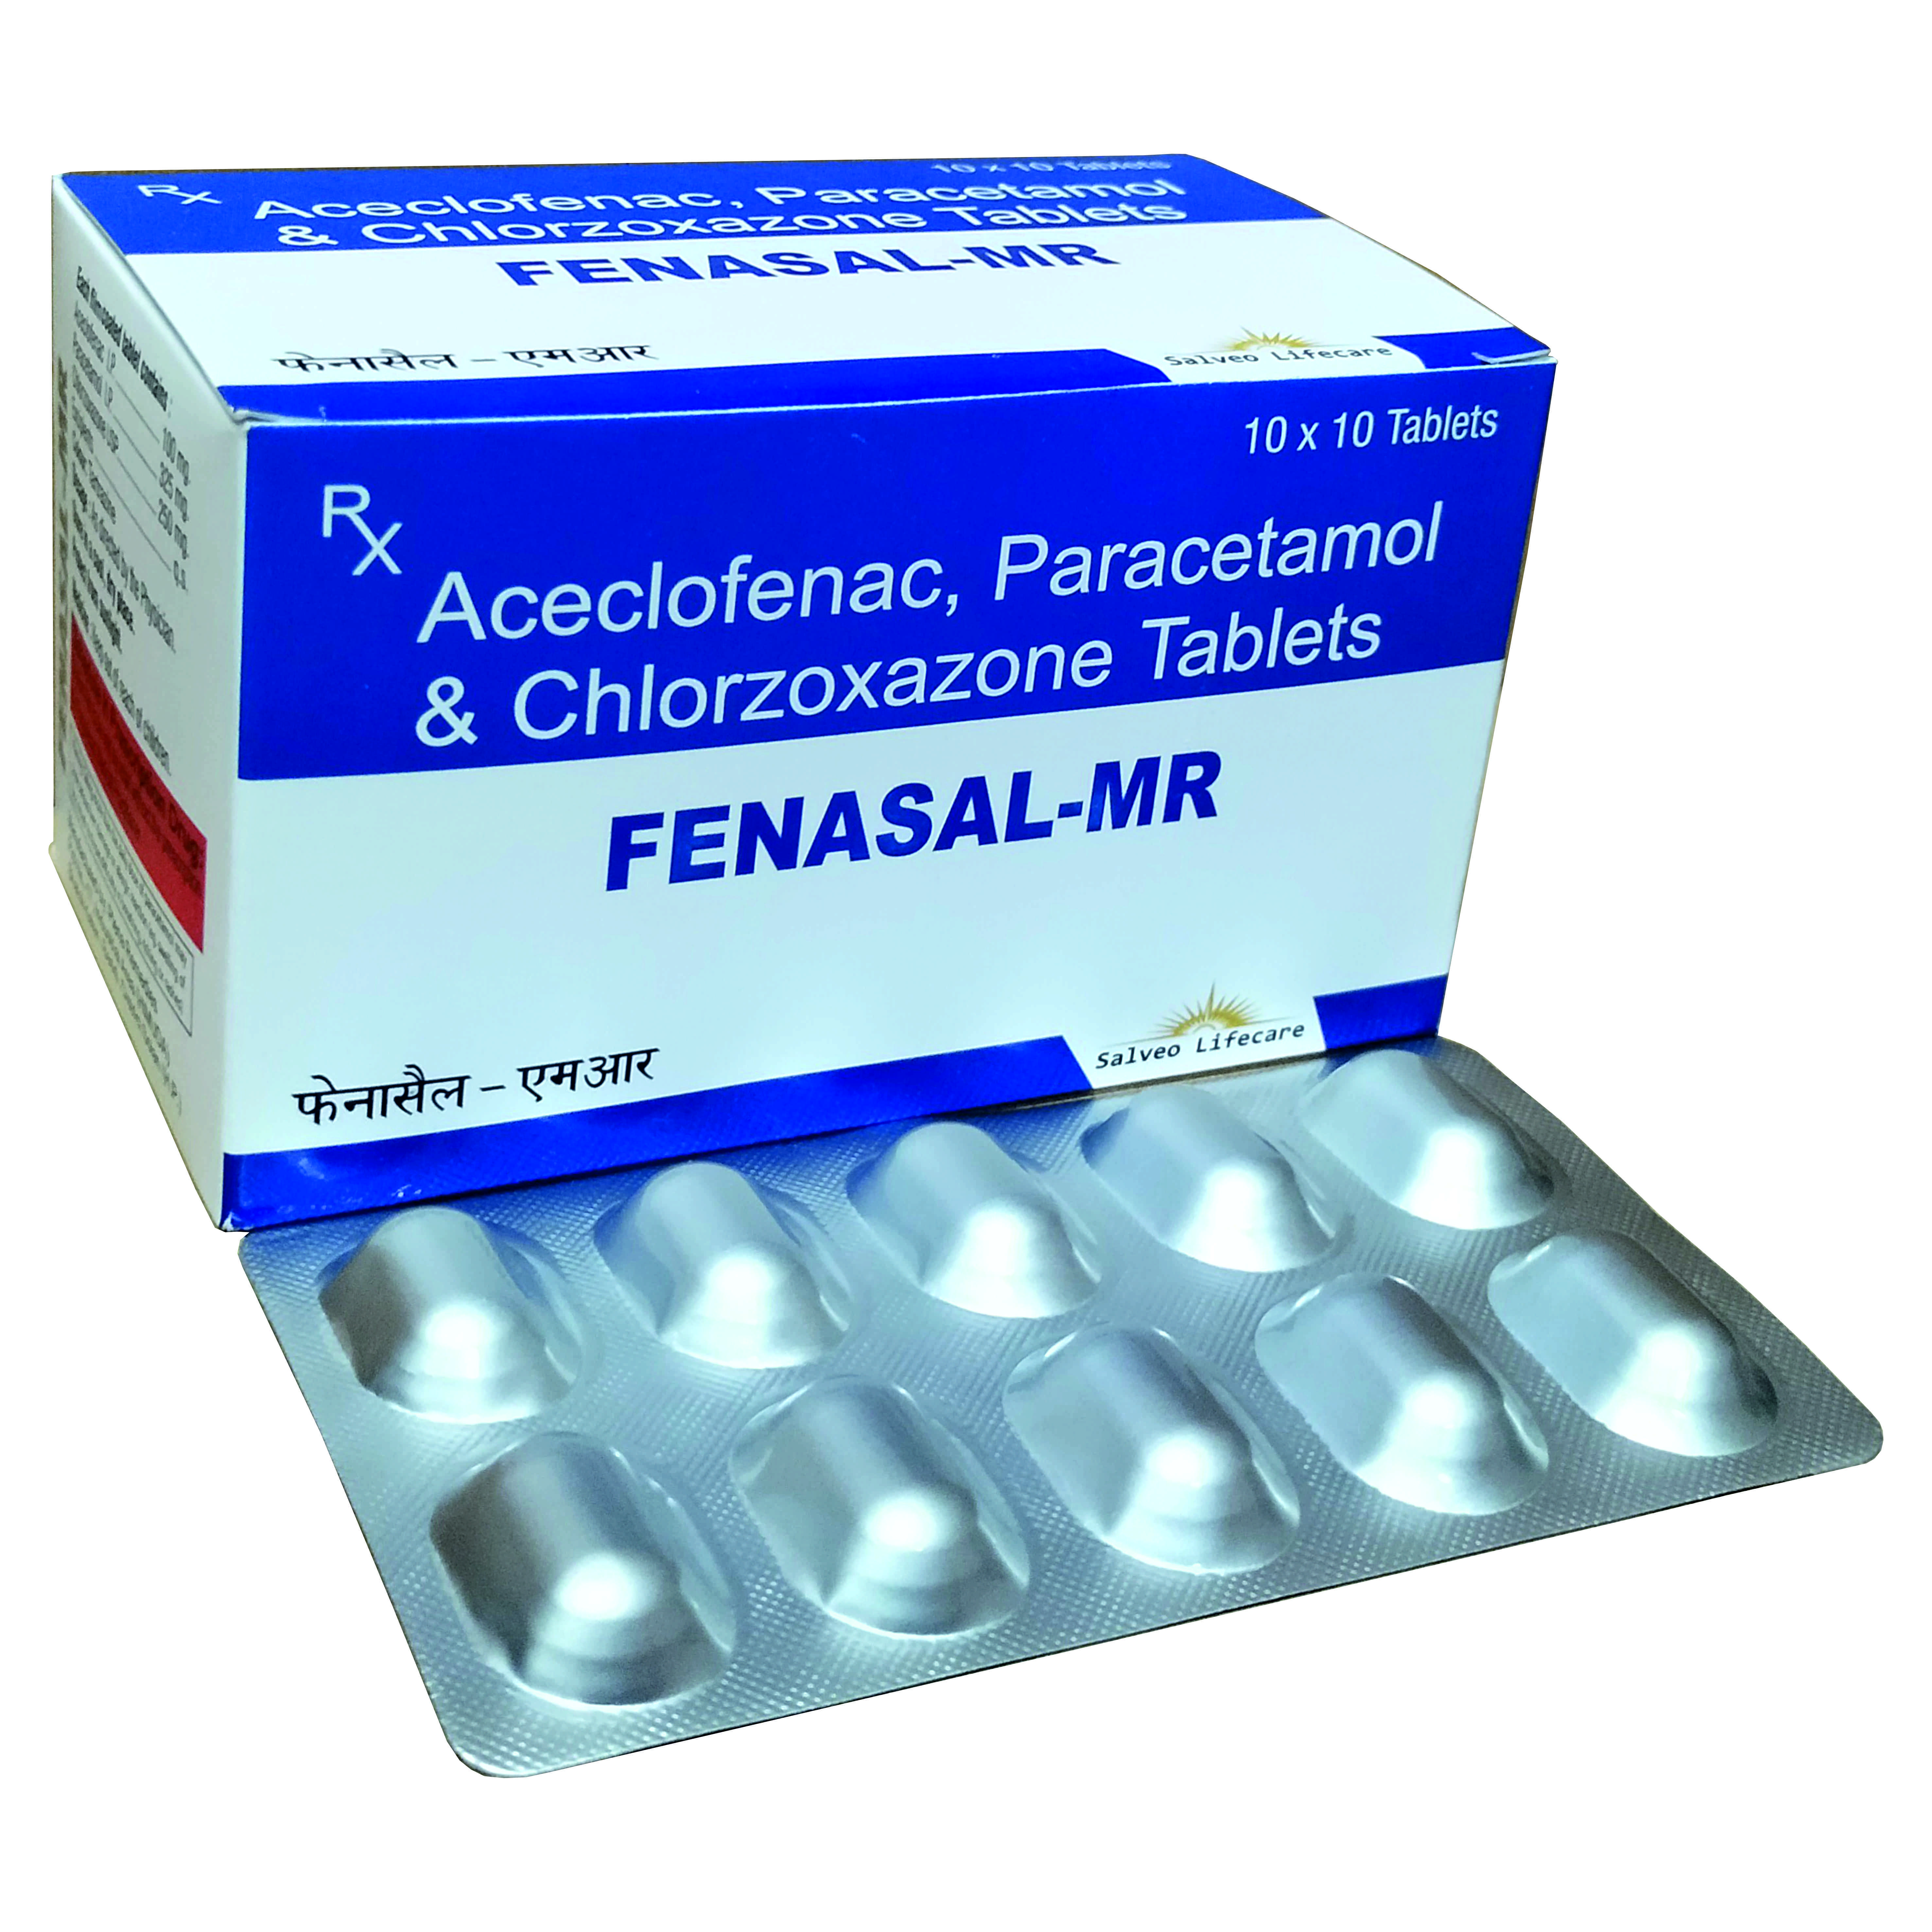 aceclofenac 100mg, paracetamol 325 mg chlorzoxasone 250 mg